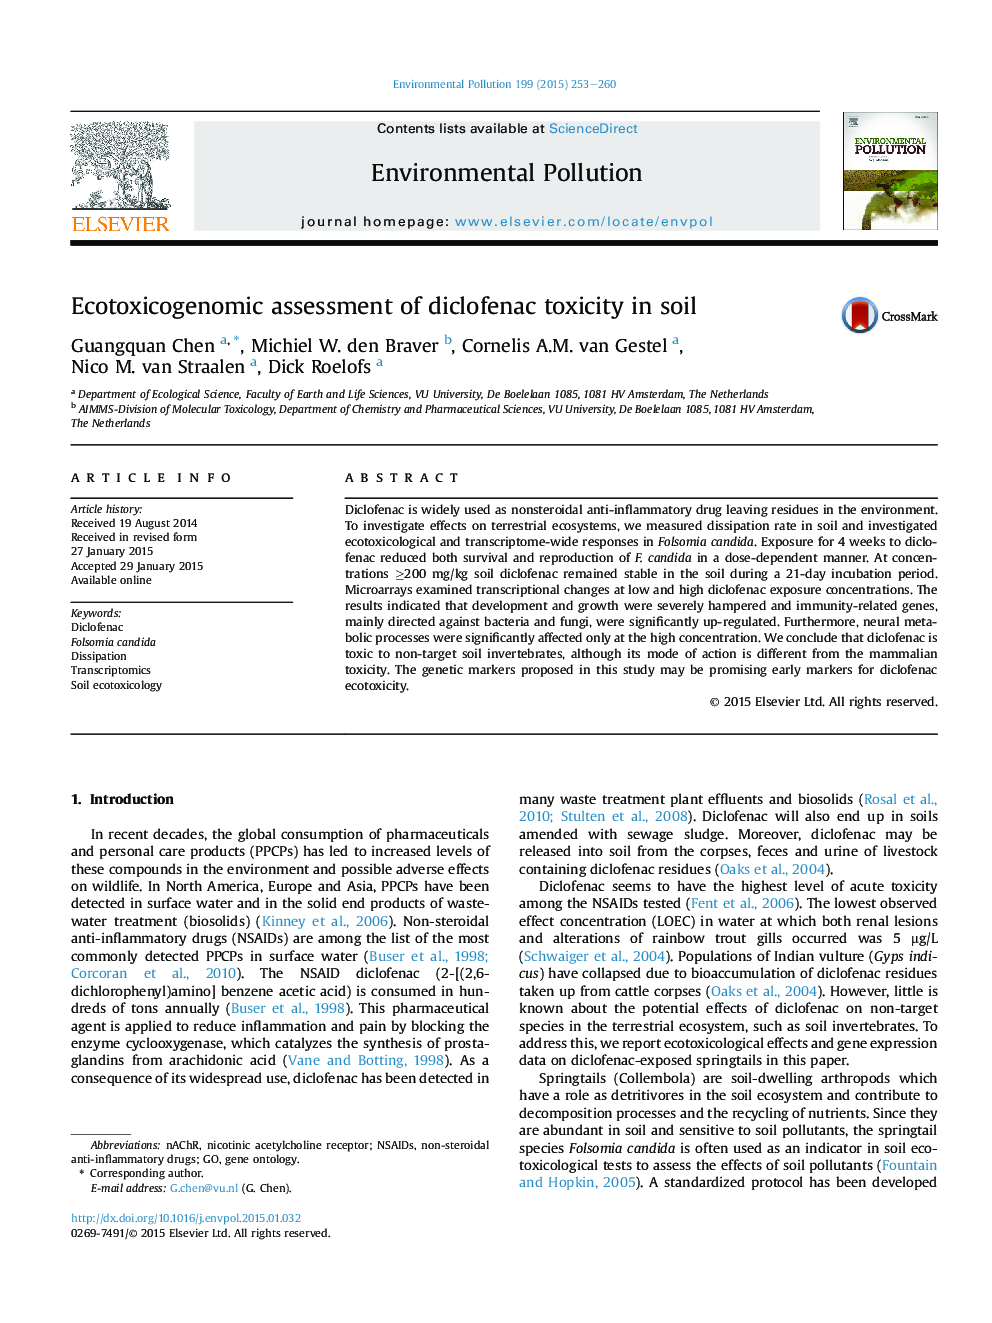 Ecotoxicogenomic assessment of diclofenac toxicity in soil